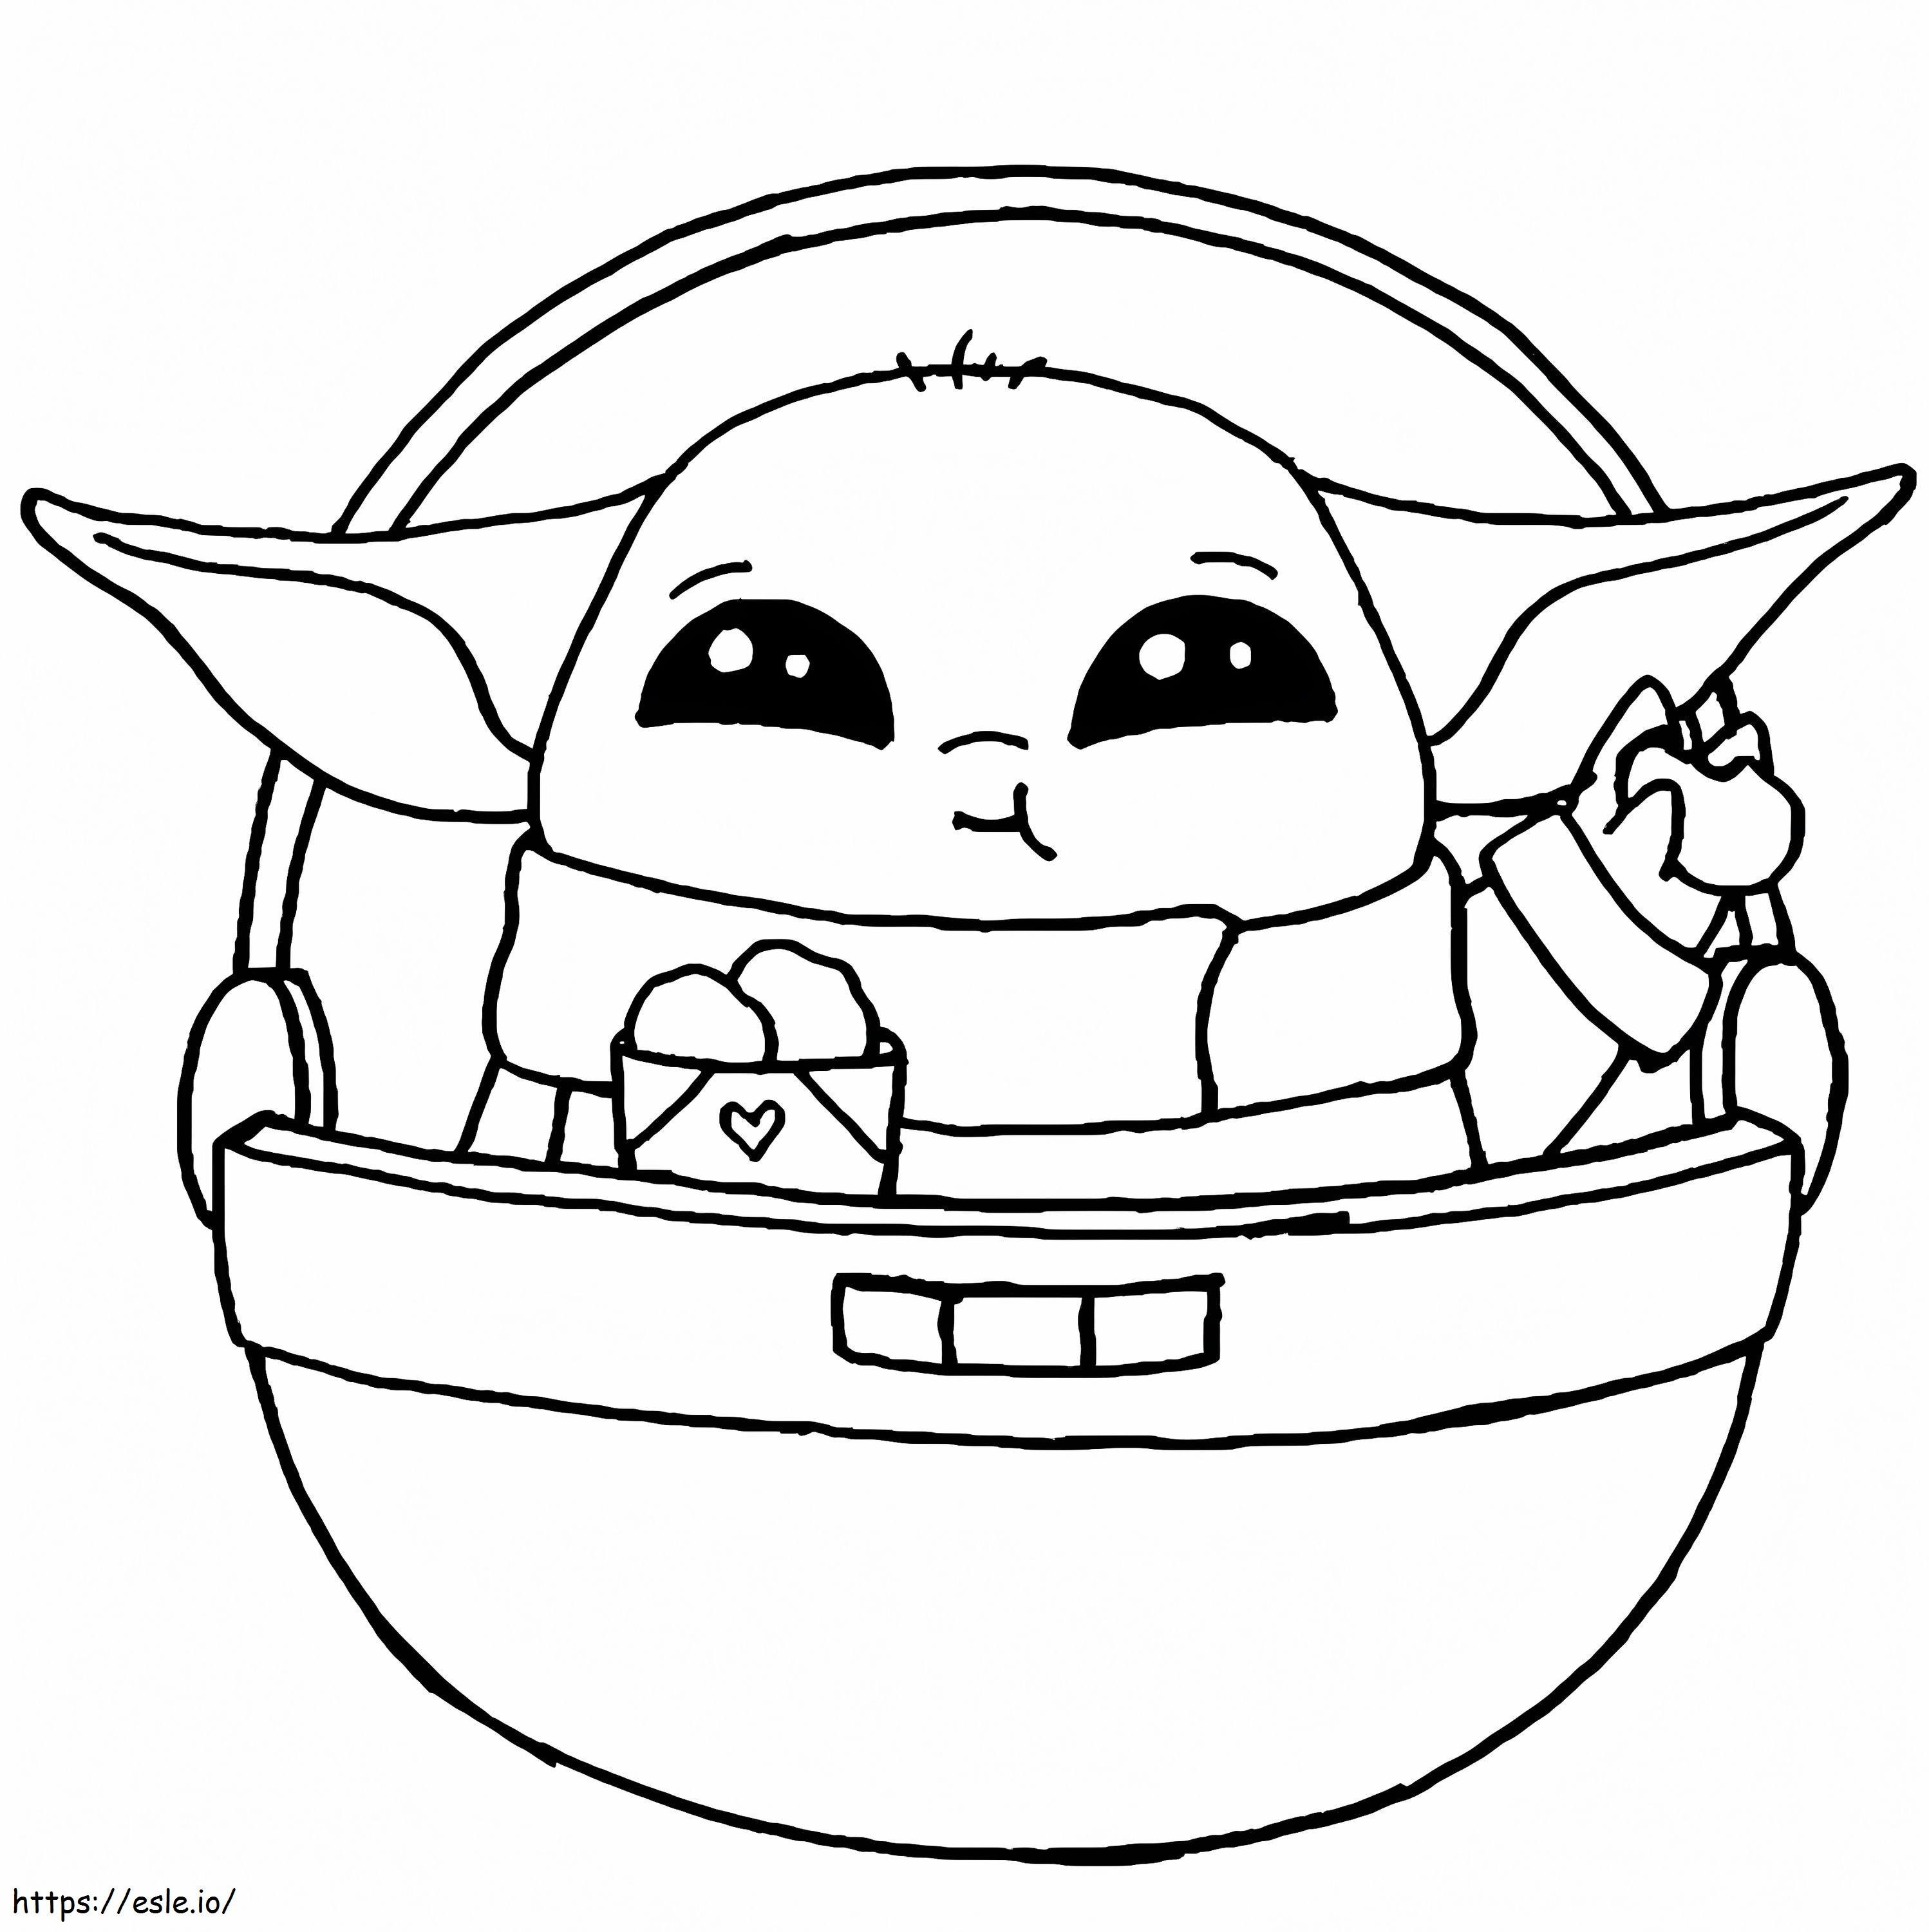 Baby Yoda 8 coloring page